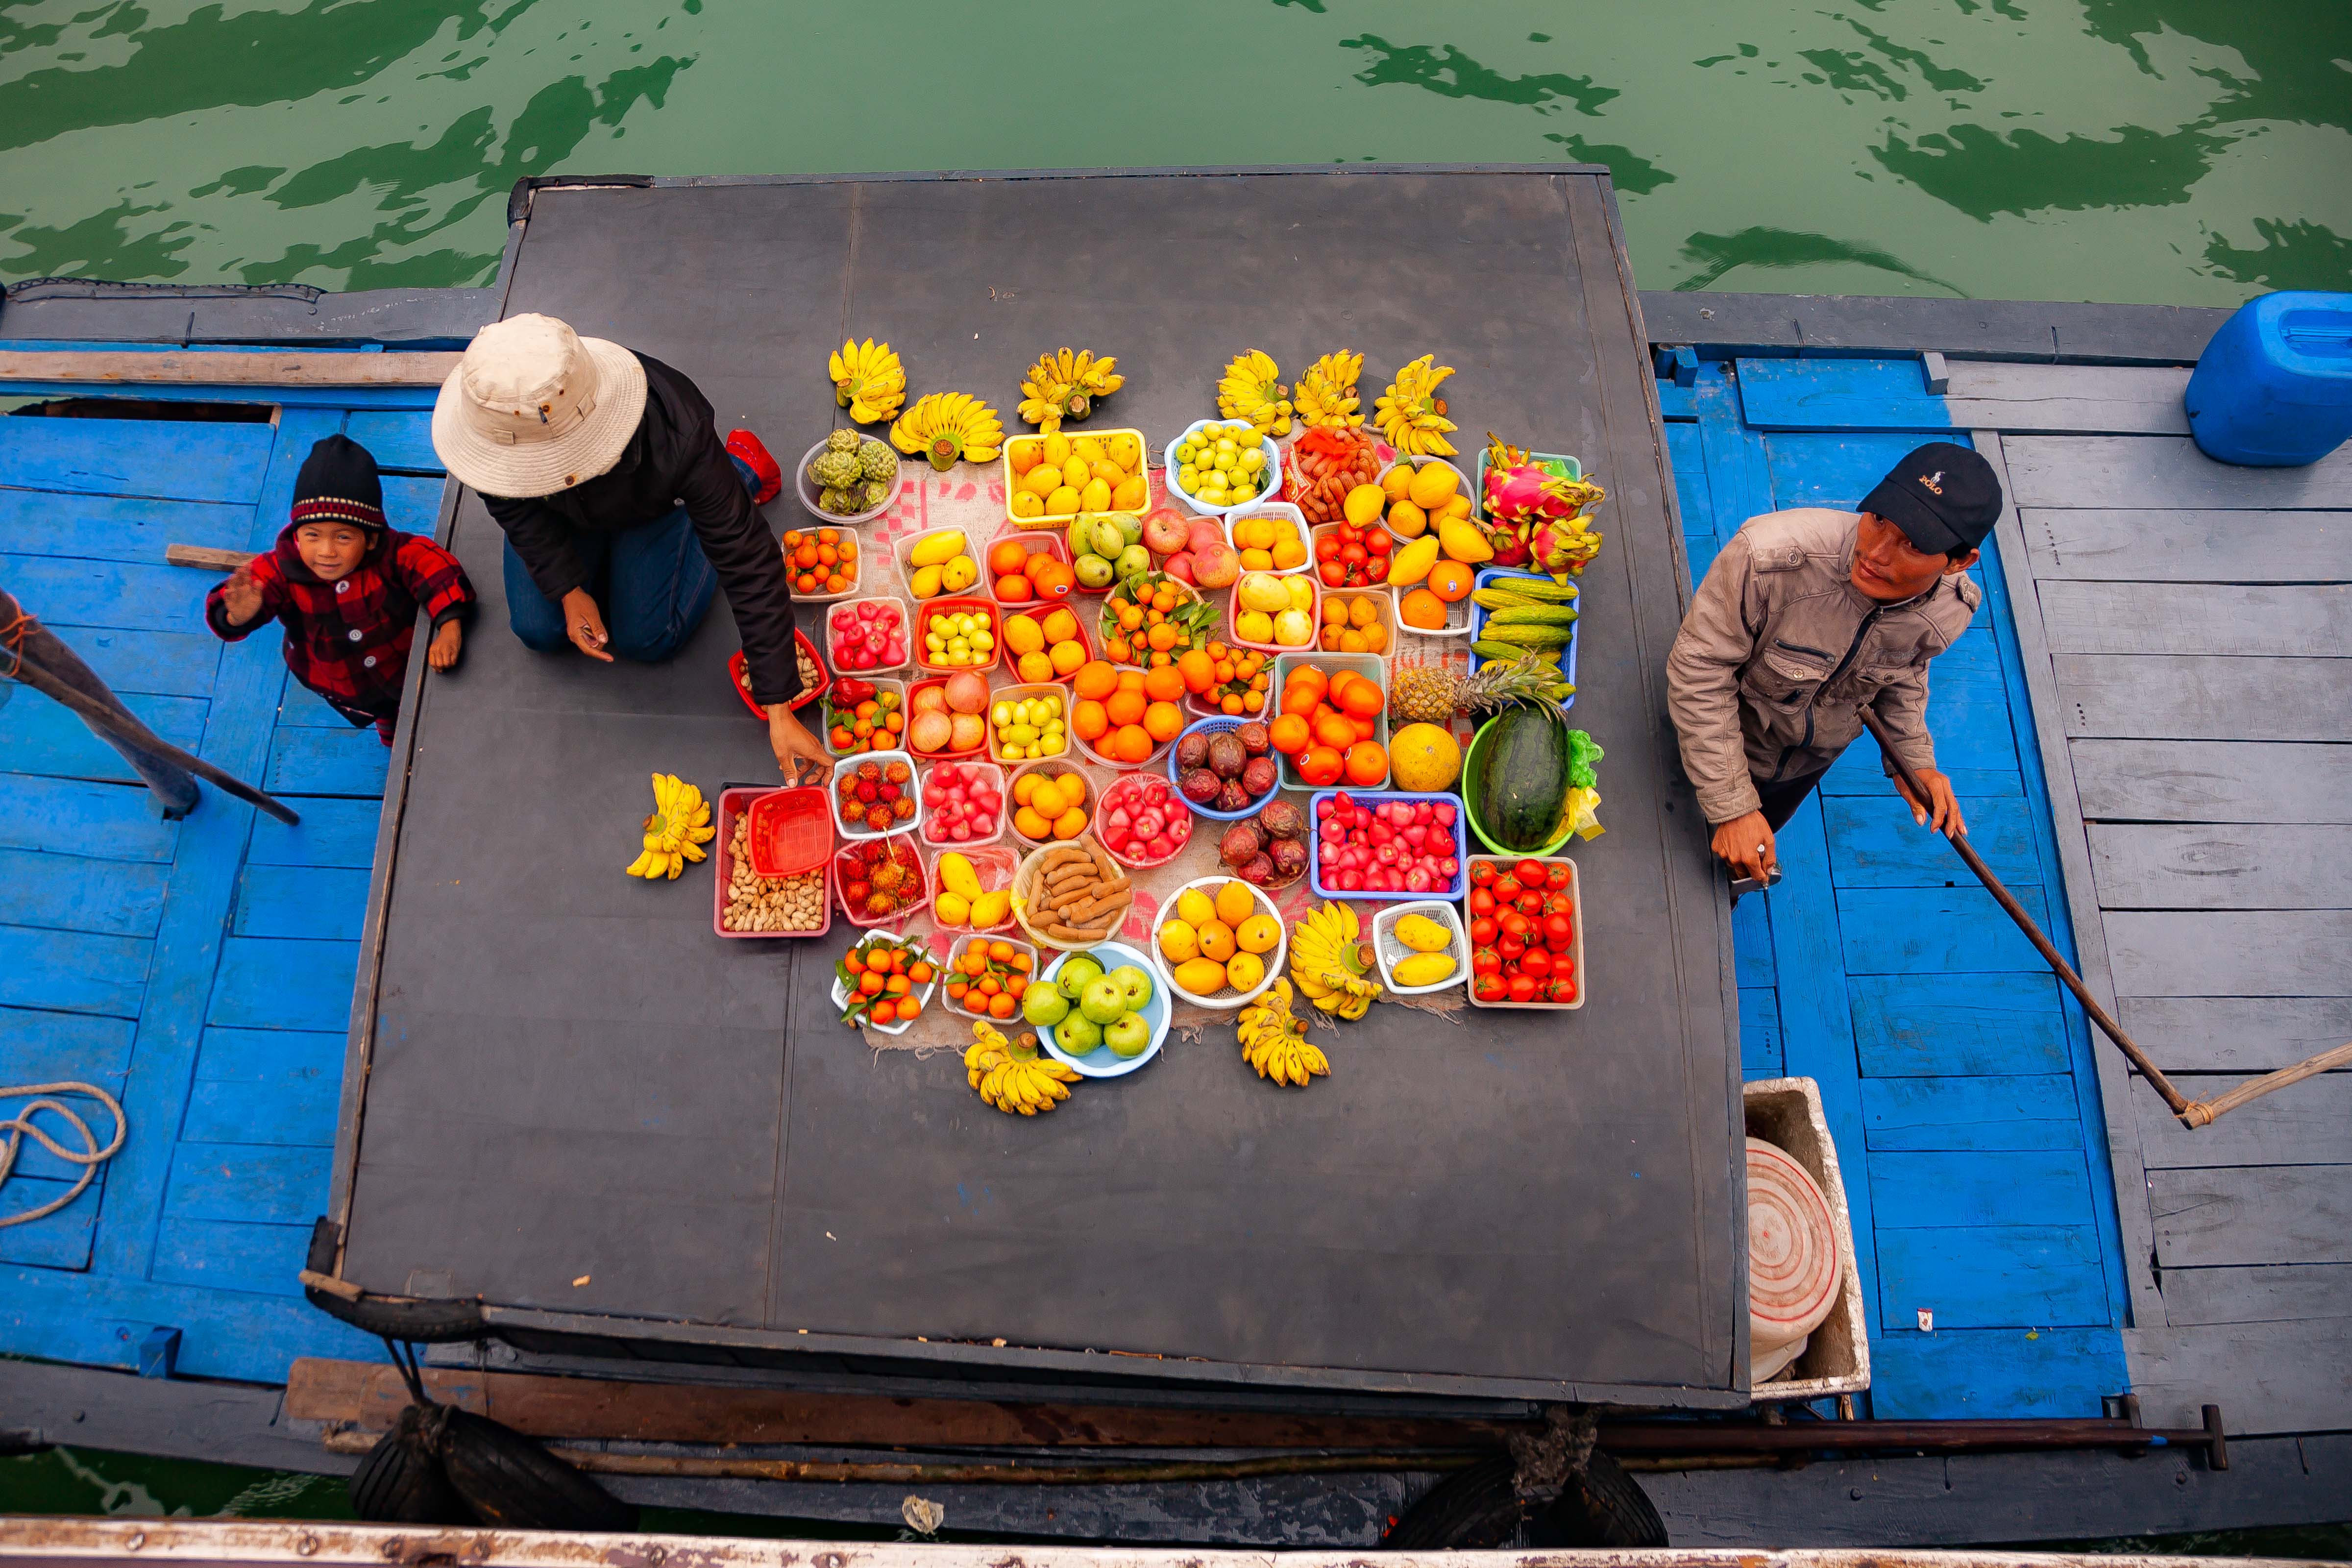 Vietnam, Quang Ninh Prov, Ha Long Bay Fruit Boat, 2010, IMG 4148